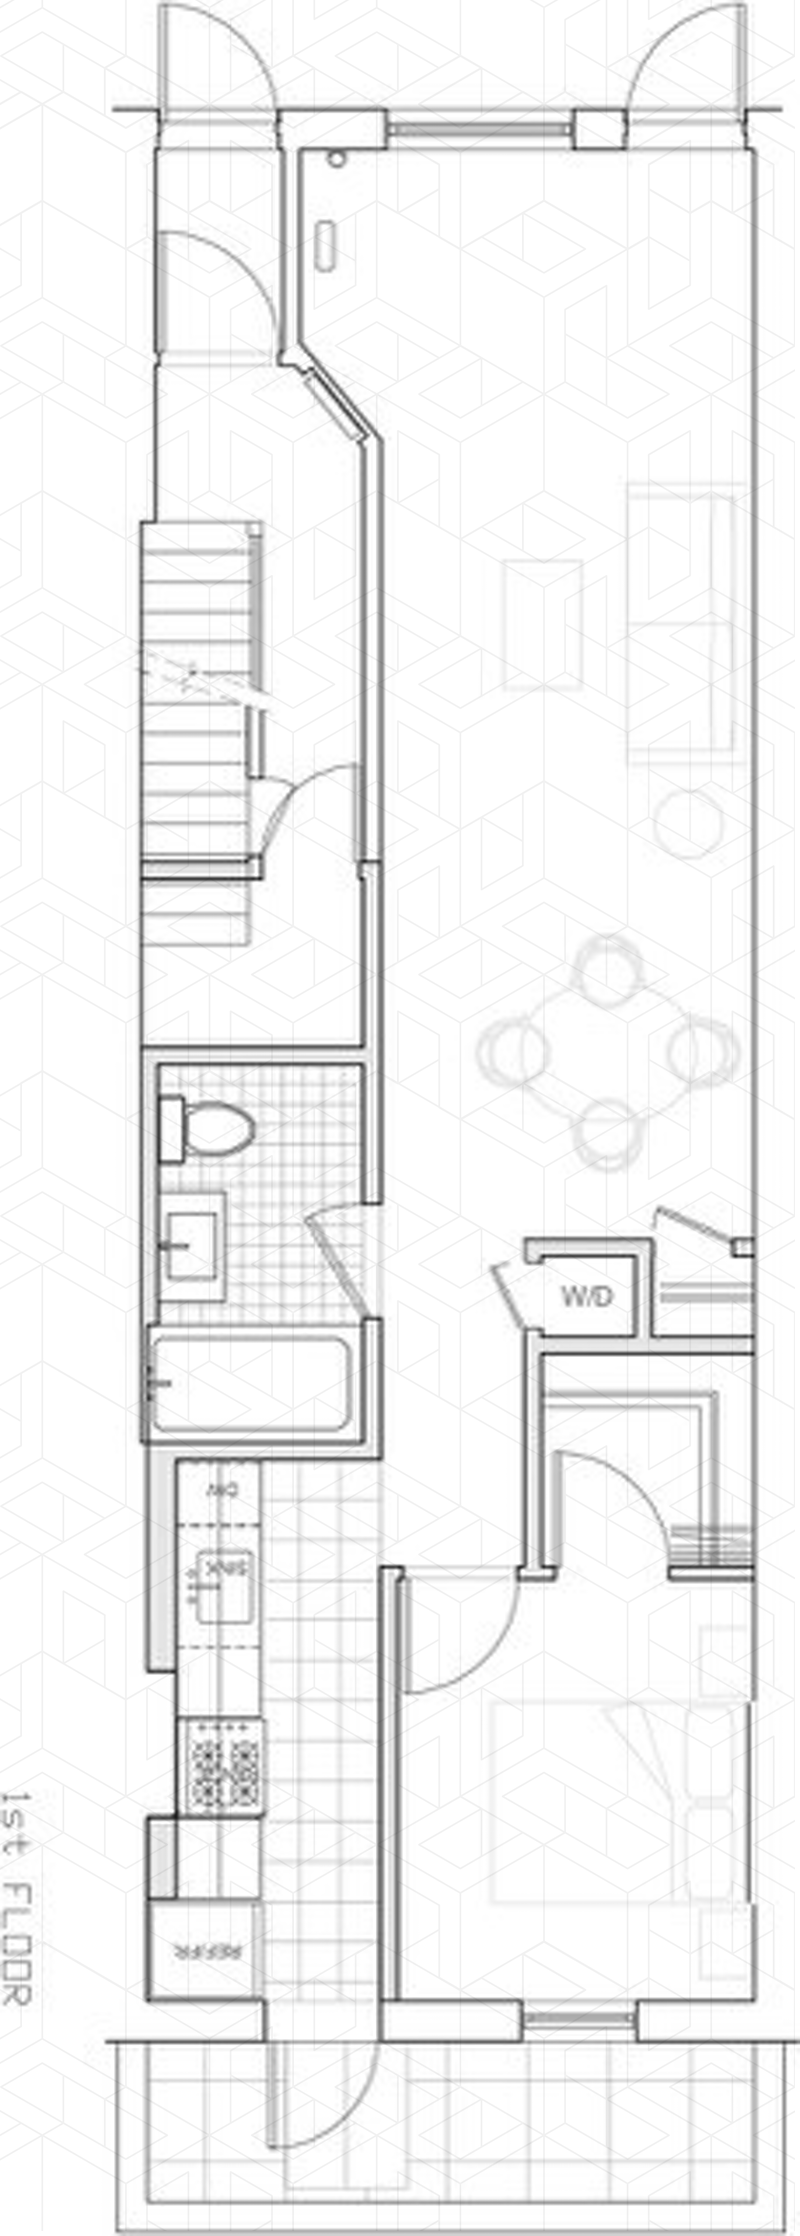 Floorplan for 623 Grand Avenue, 1